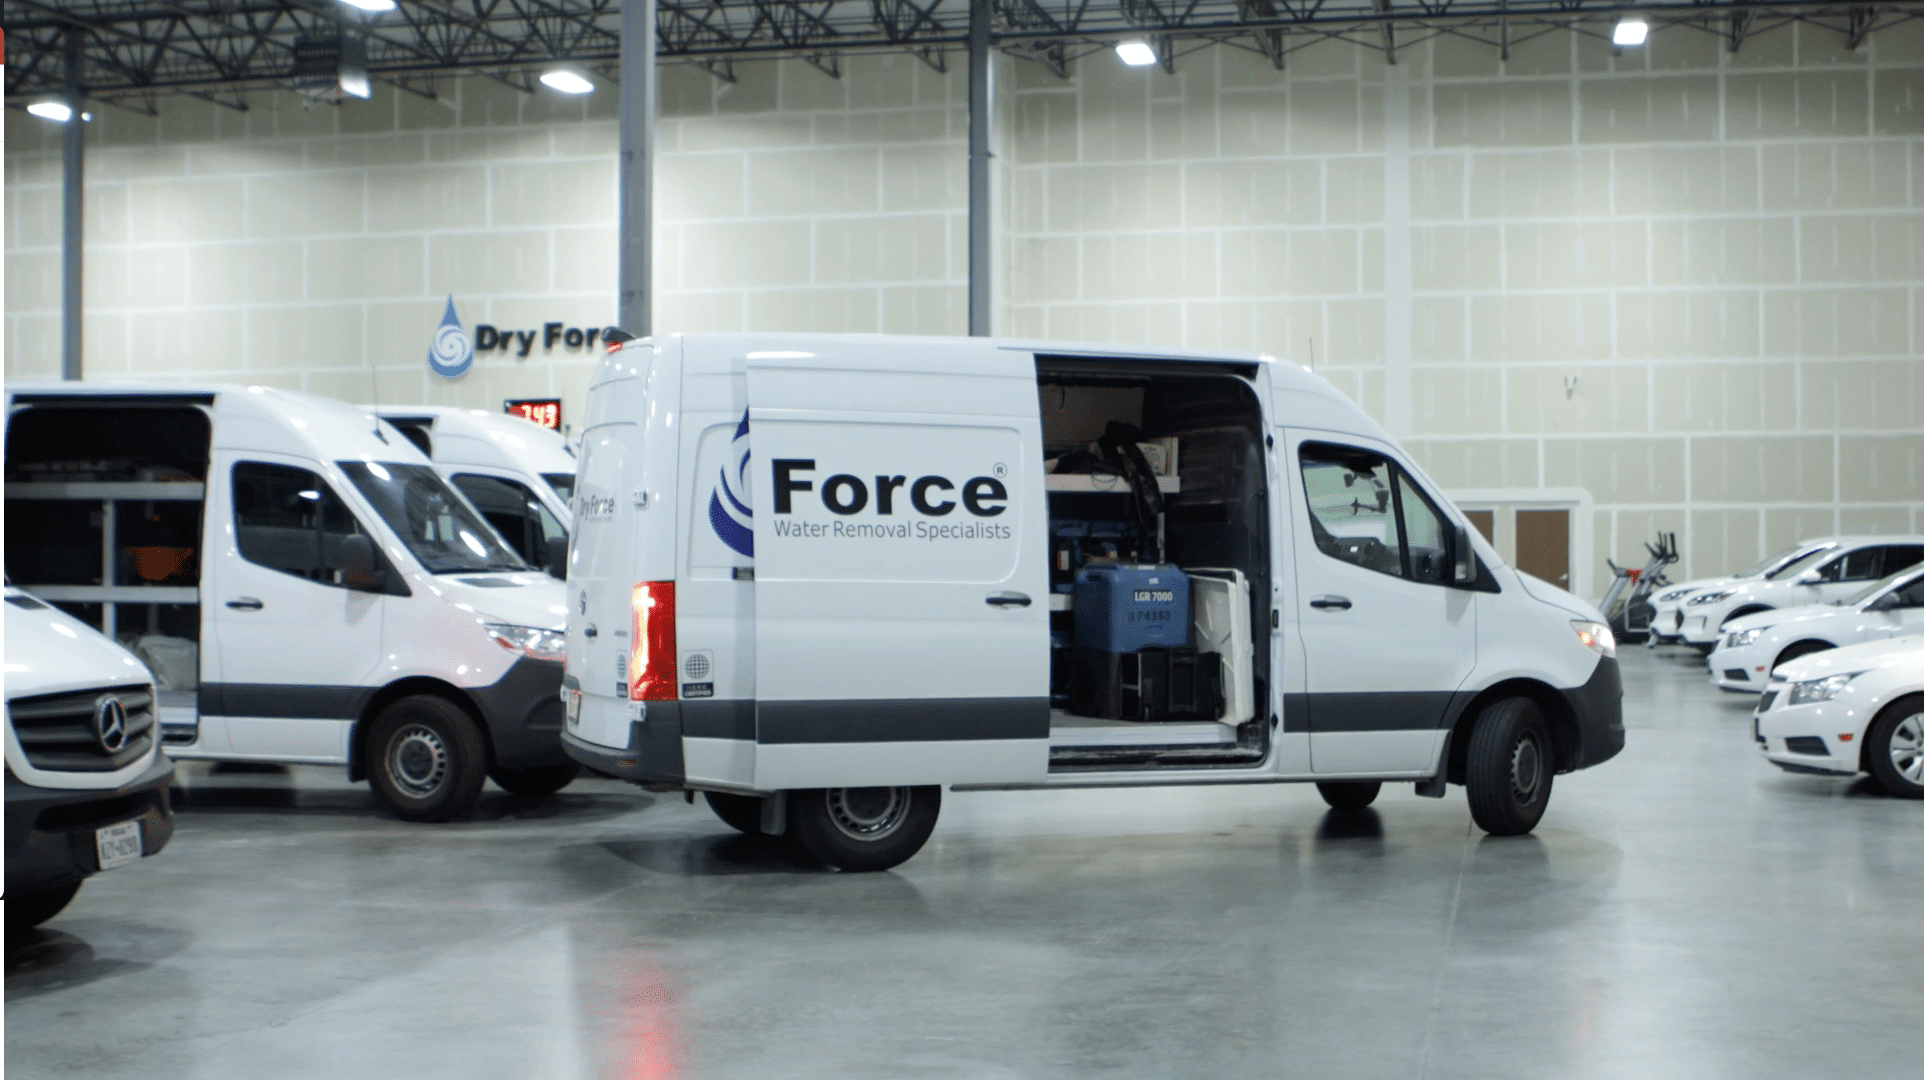 Dry Force service vans